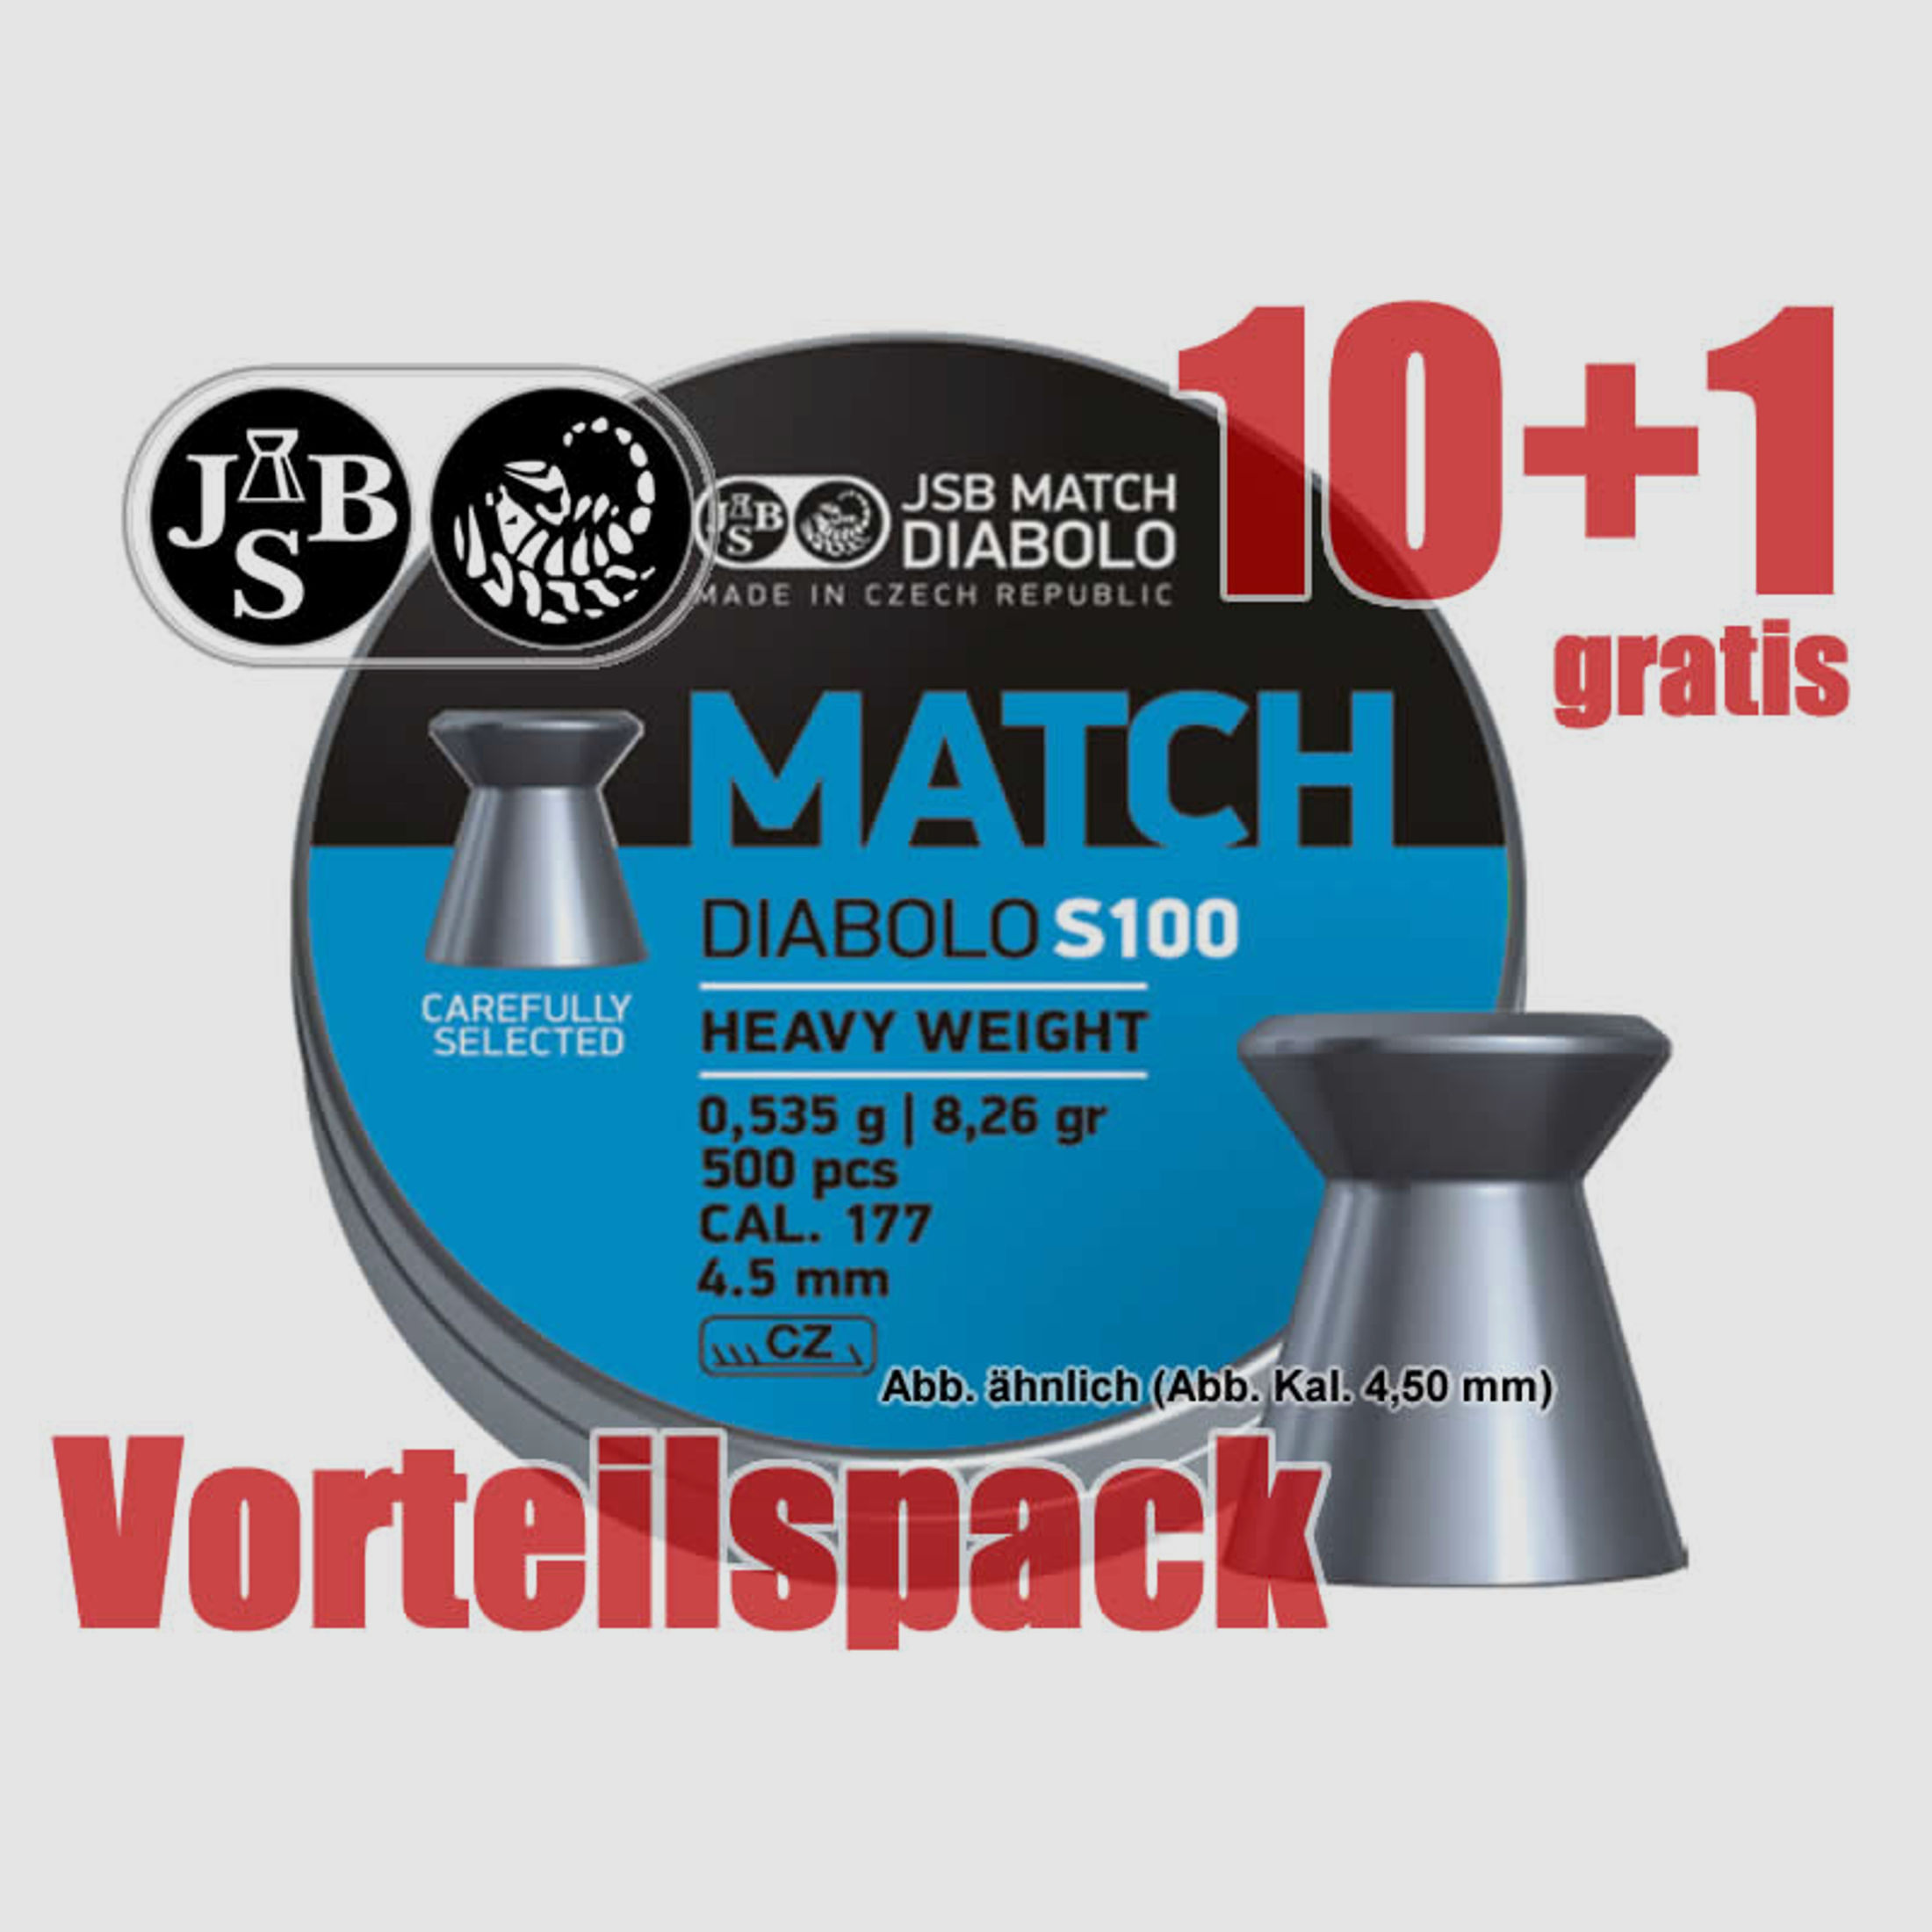 10+1 GRATIS x 500 St. Match-Diabolo JSB MATCH S100 HEAVY, Kal. 4,48 mm, 0,535 g